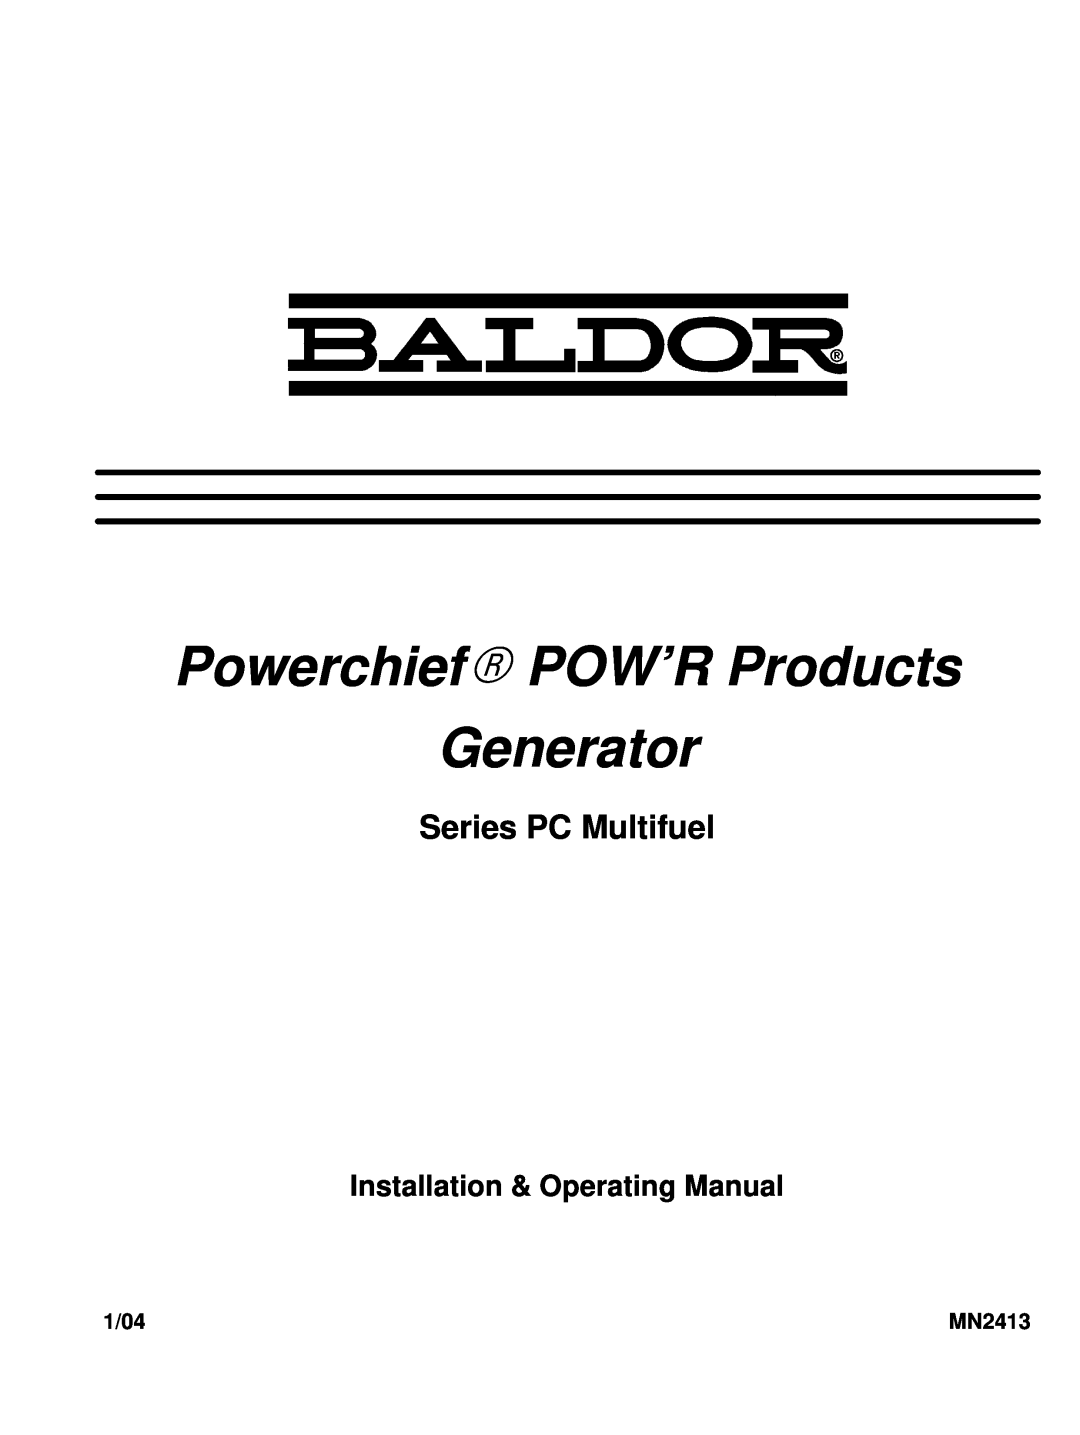 Baldor Series PC Mutlifuel manual PowerchiefR POW’R Products, Generator, Series PC Multifuel, 1/04, MN2413 